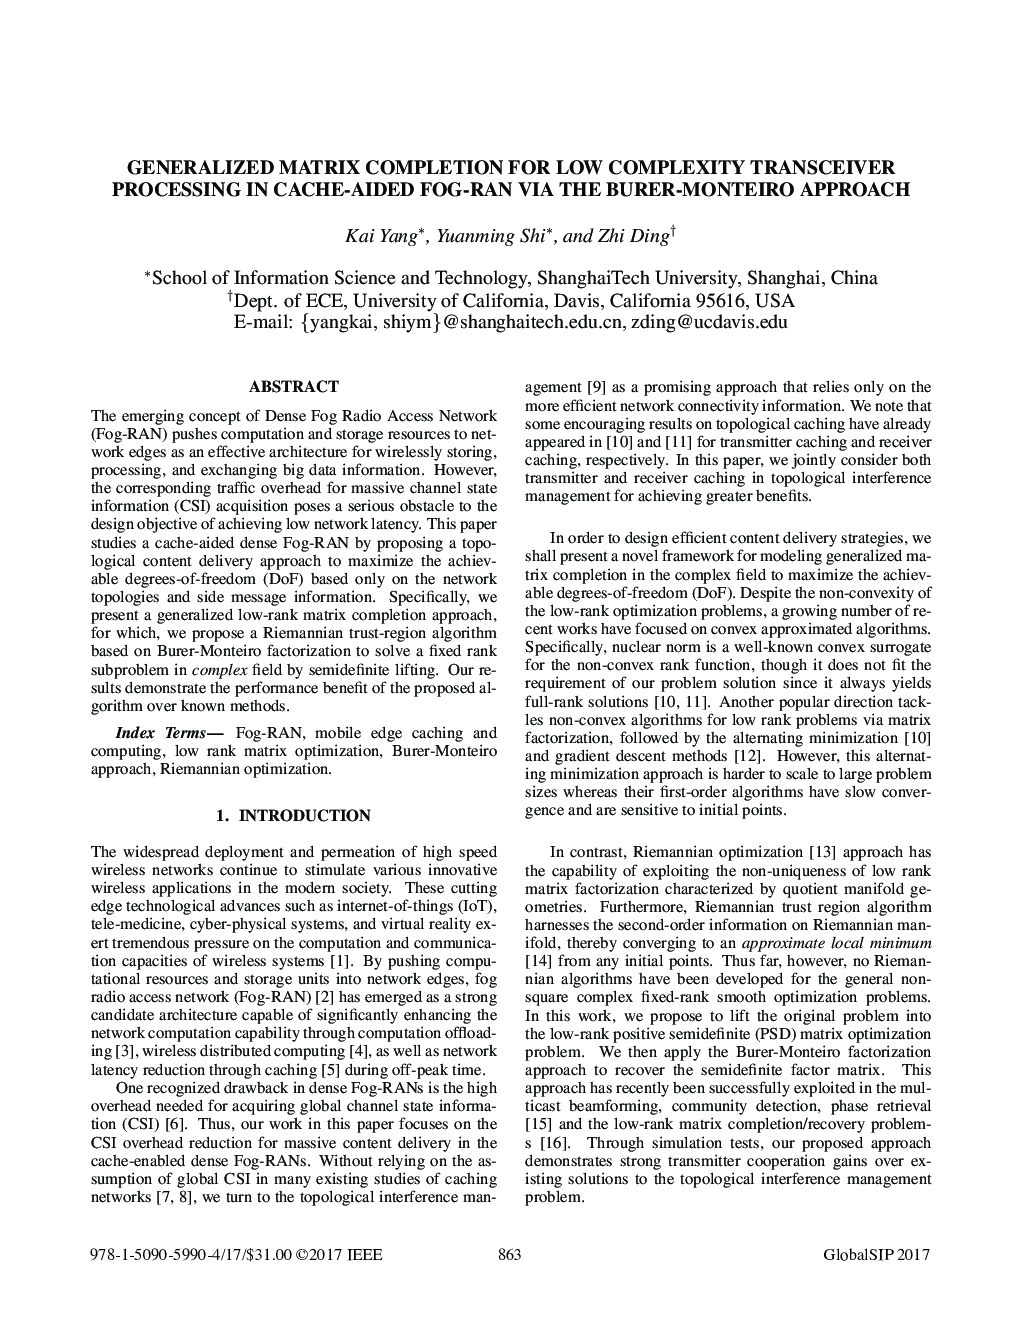 A comprehensive review on heat transfer characteristics of TiO2 nanofluids